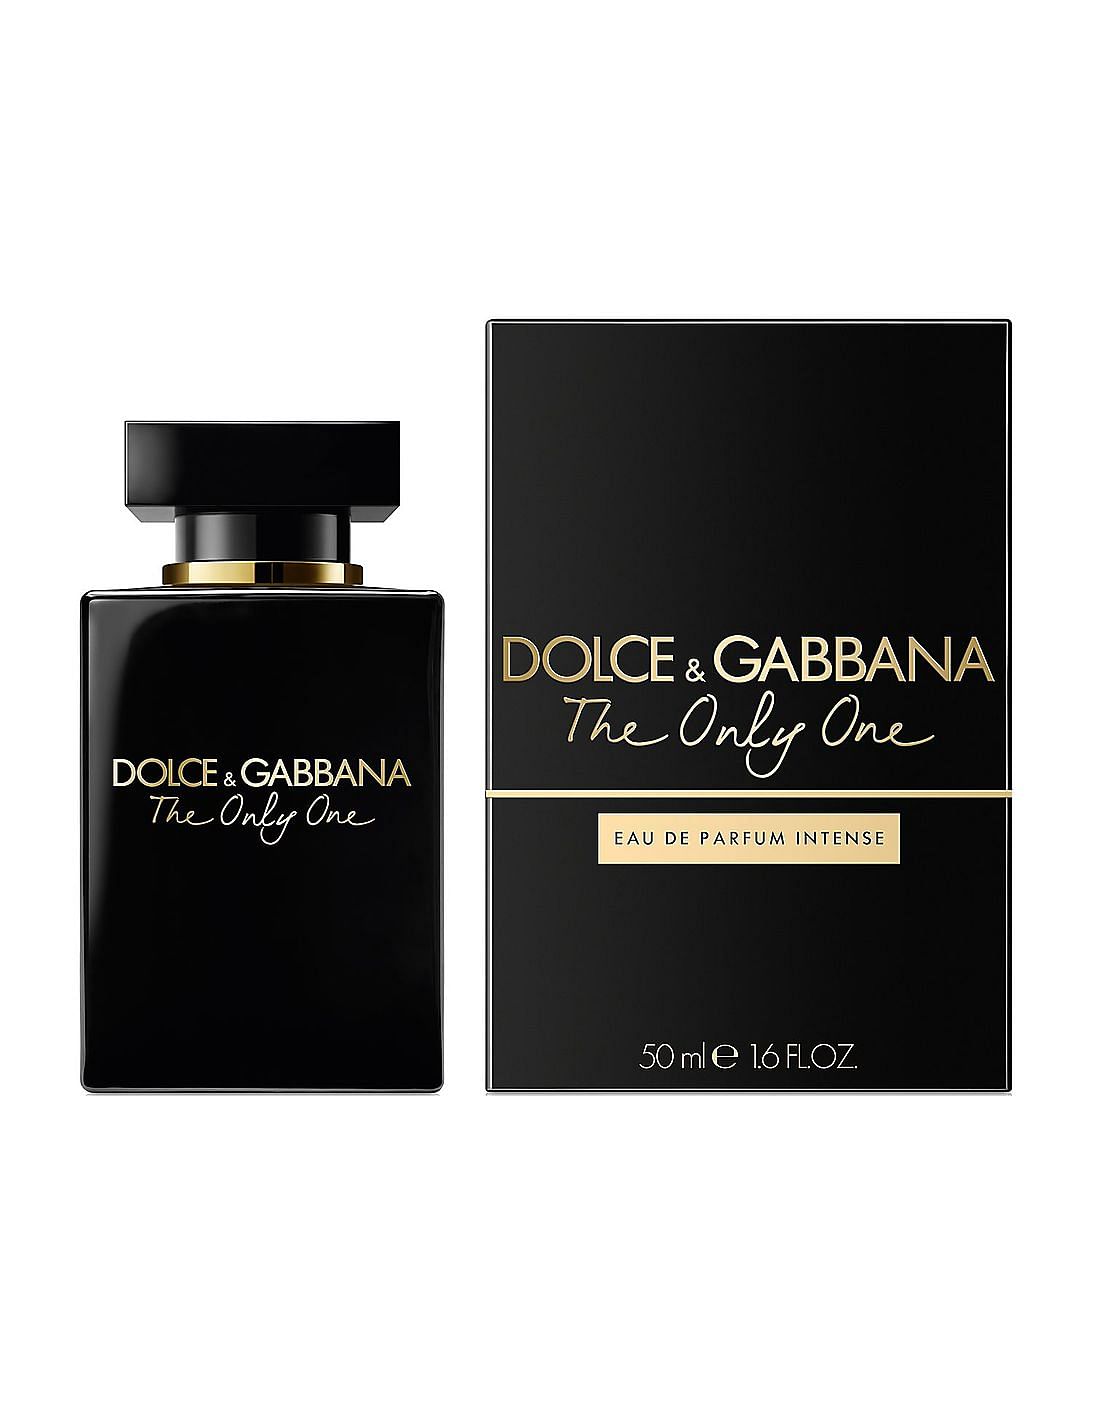 Dolce gabbana intense купить. Dolce & Gabbana the only one, EDP., 100 ml. Дольче Габбана Онли уан 50 мл. Дольче Габбана духи 100 мл. Духи Дольче Габбана the only one.